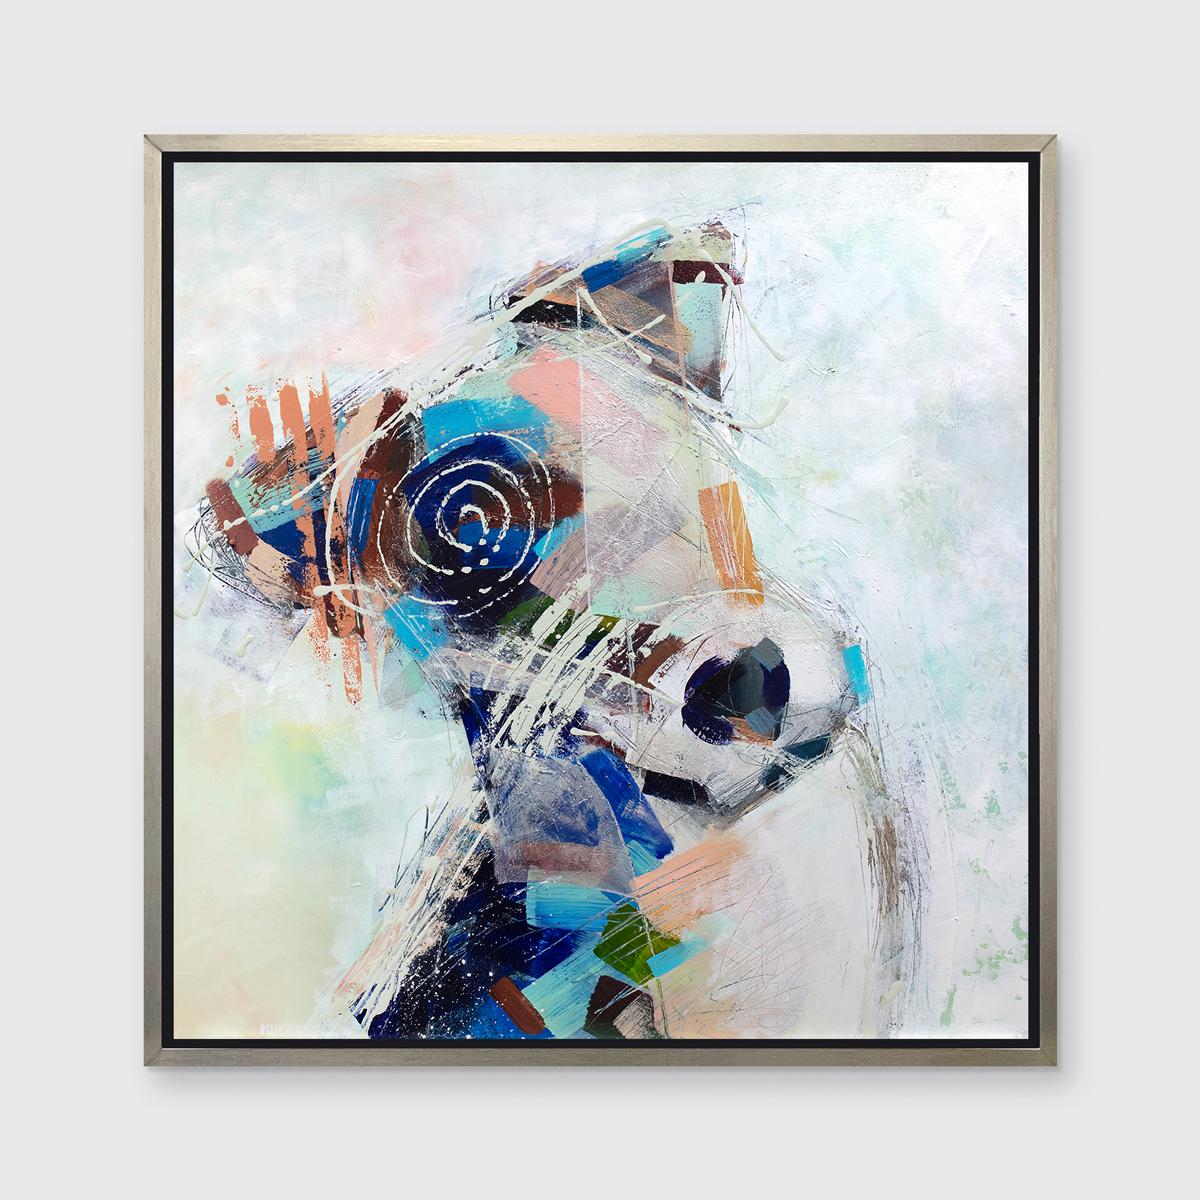 Abstract Print Russell Miyaki - « Course Dog » Impression giclée en édition limitée, 36" x 36"